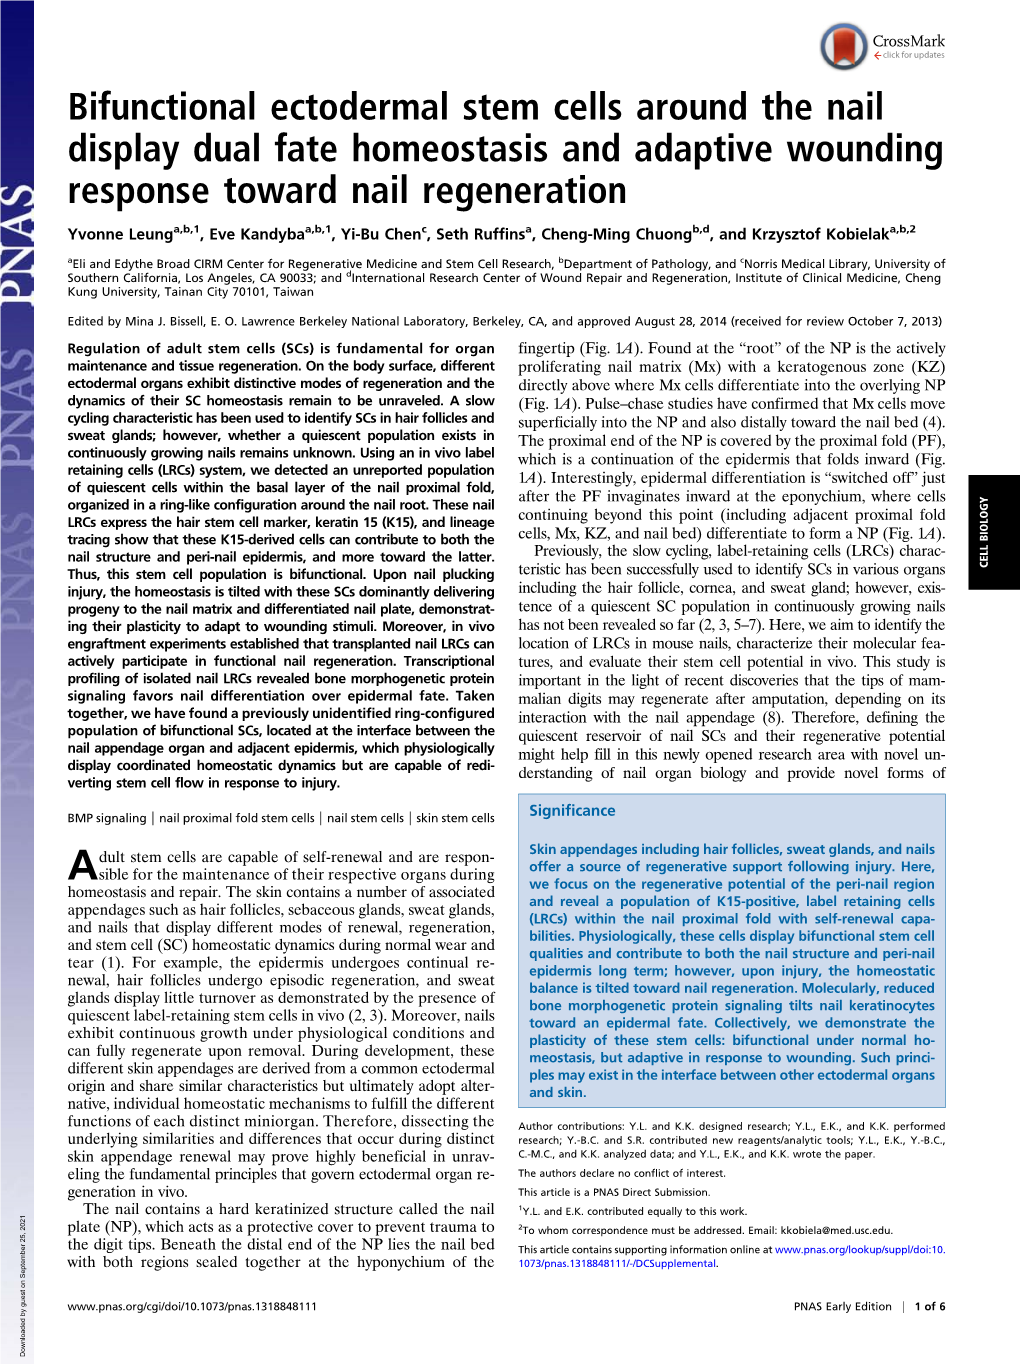 Bifunctional Ectodermal Stem Cells Around the Nail Display Dual Fate Homeostasis and Adaptive Wounding Response Toward Nail Regeneration